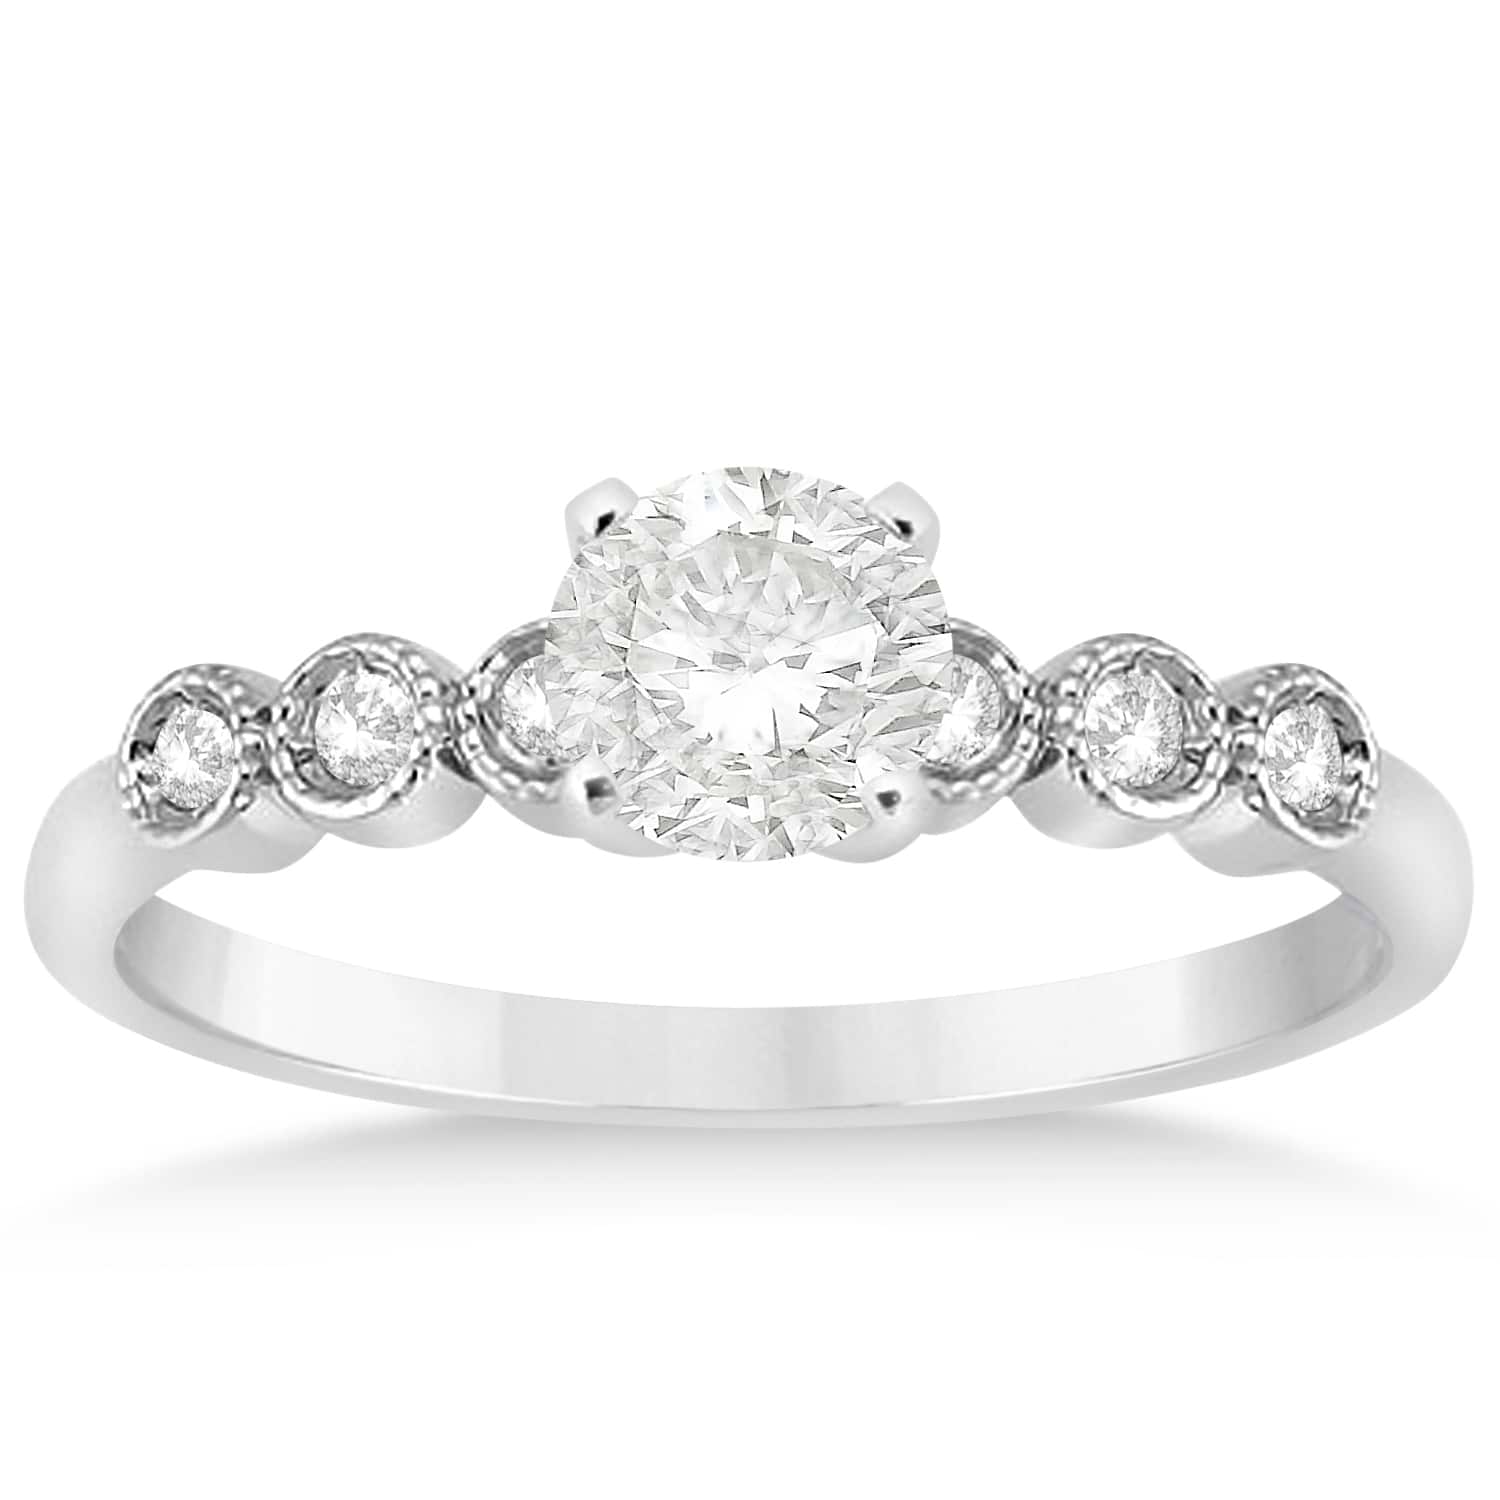 Diamond Bezel Set Engagement Ring Setting 14k White Gold (0.09ct)